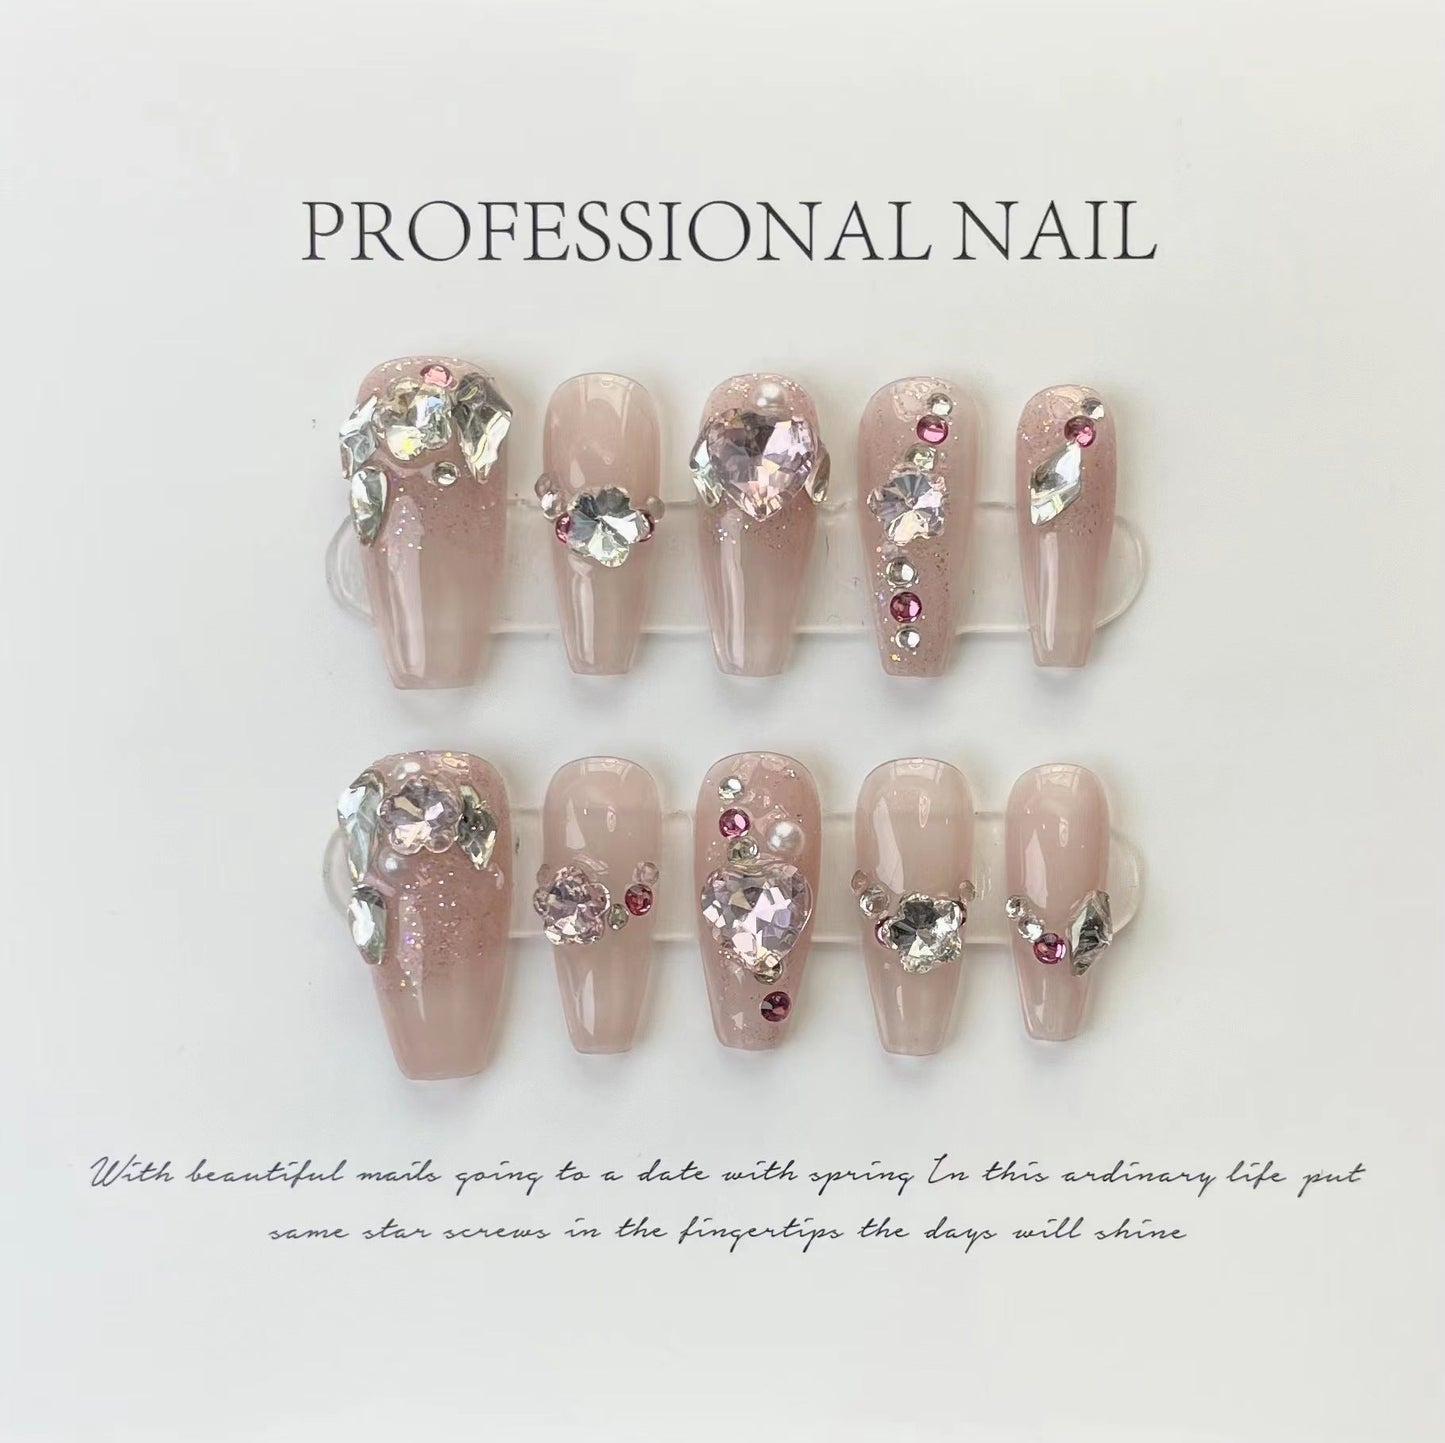 559 Rhinestone style press on nails 100% handmade false nails nude color